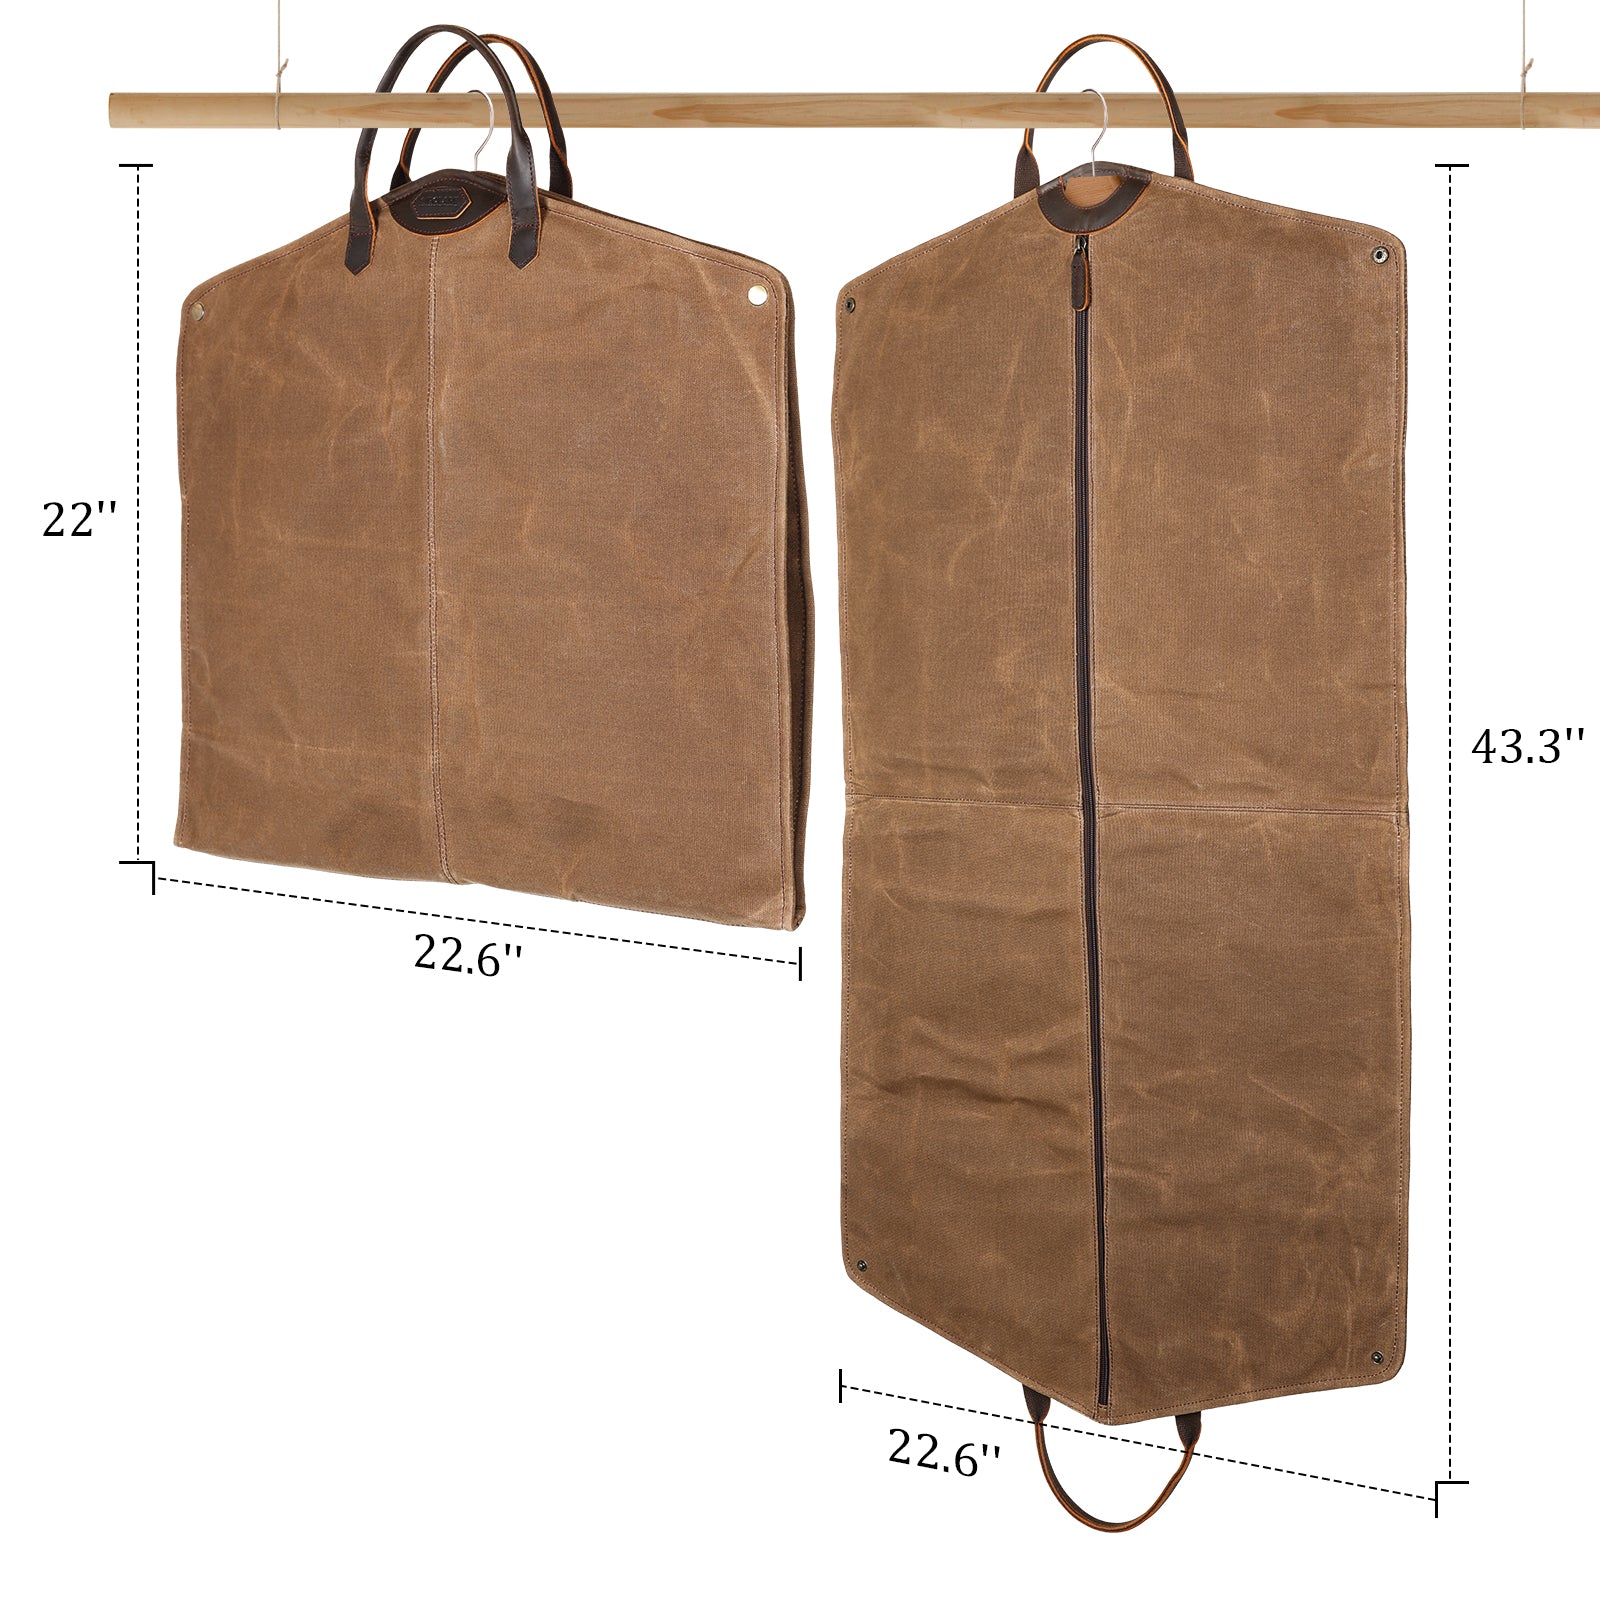 Waxed Canvas Full Grain Leather Trim Garment Bag for Travel (Dimension)